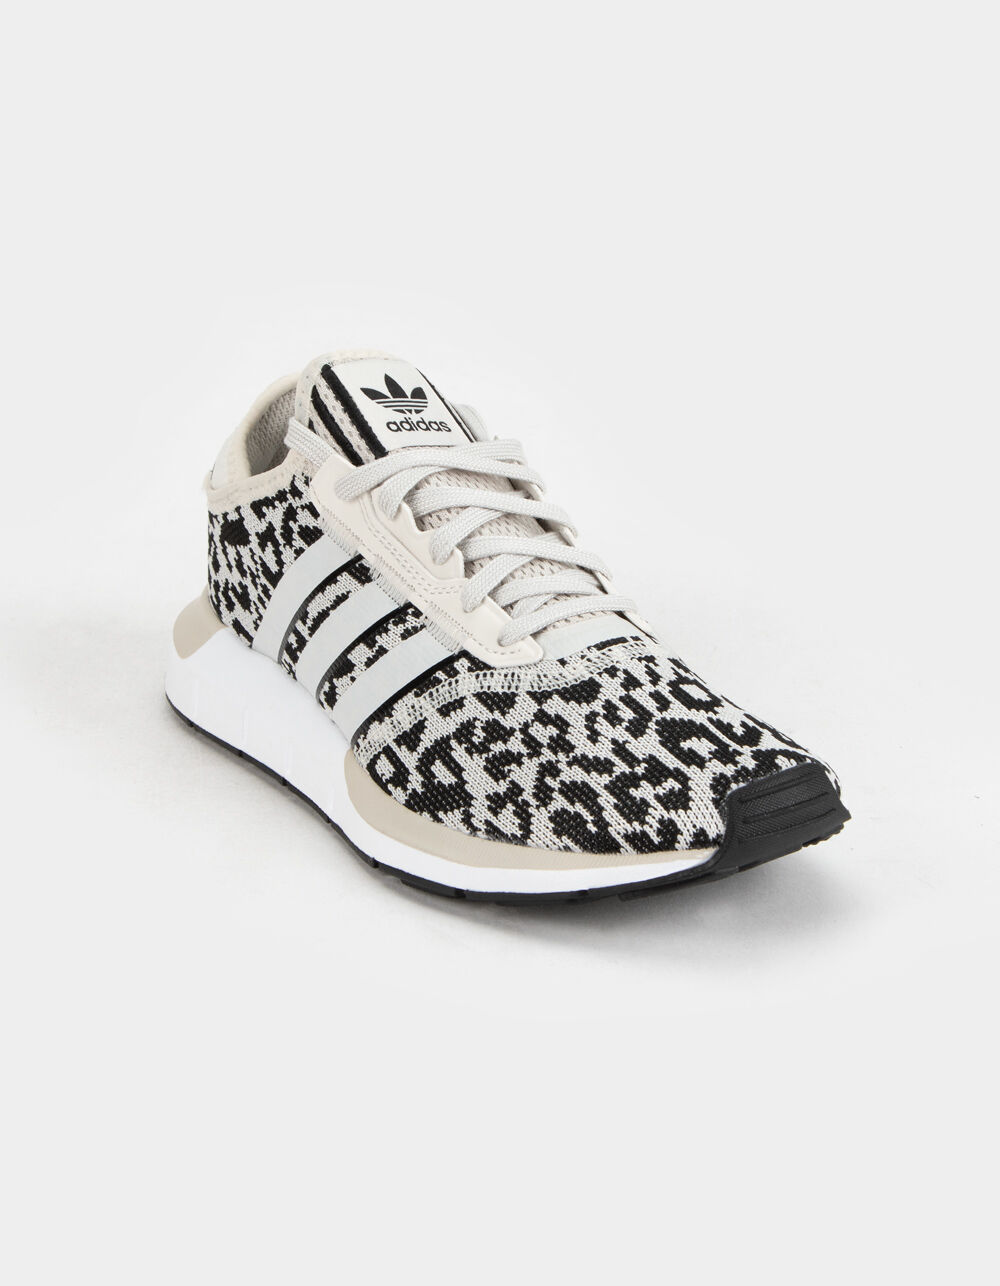 ADIDAS Swift Run X Gray Leopard Shoes - GRAY LEOPARD |